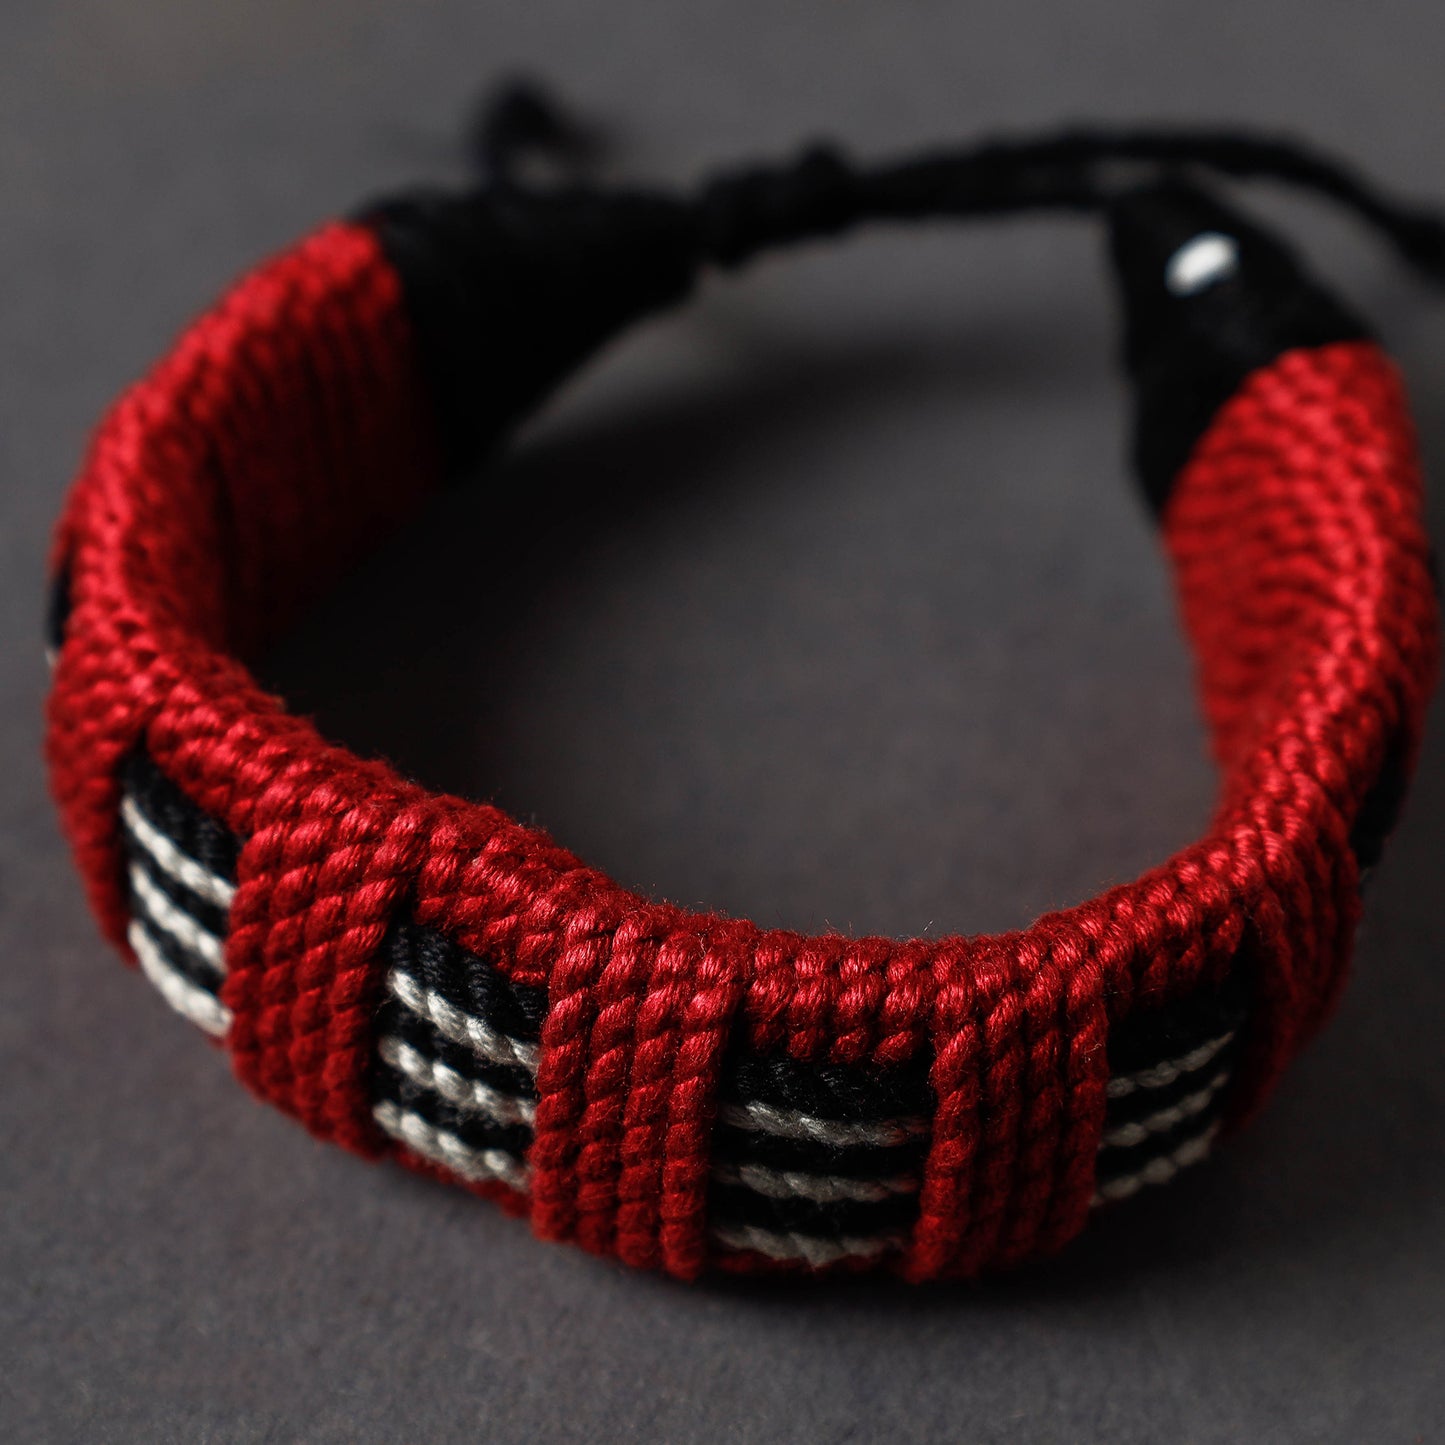 Handcrafted Threadwork Wristband Bracelet by Miharu